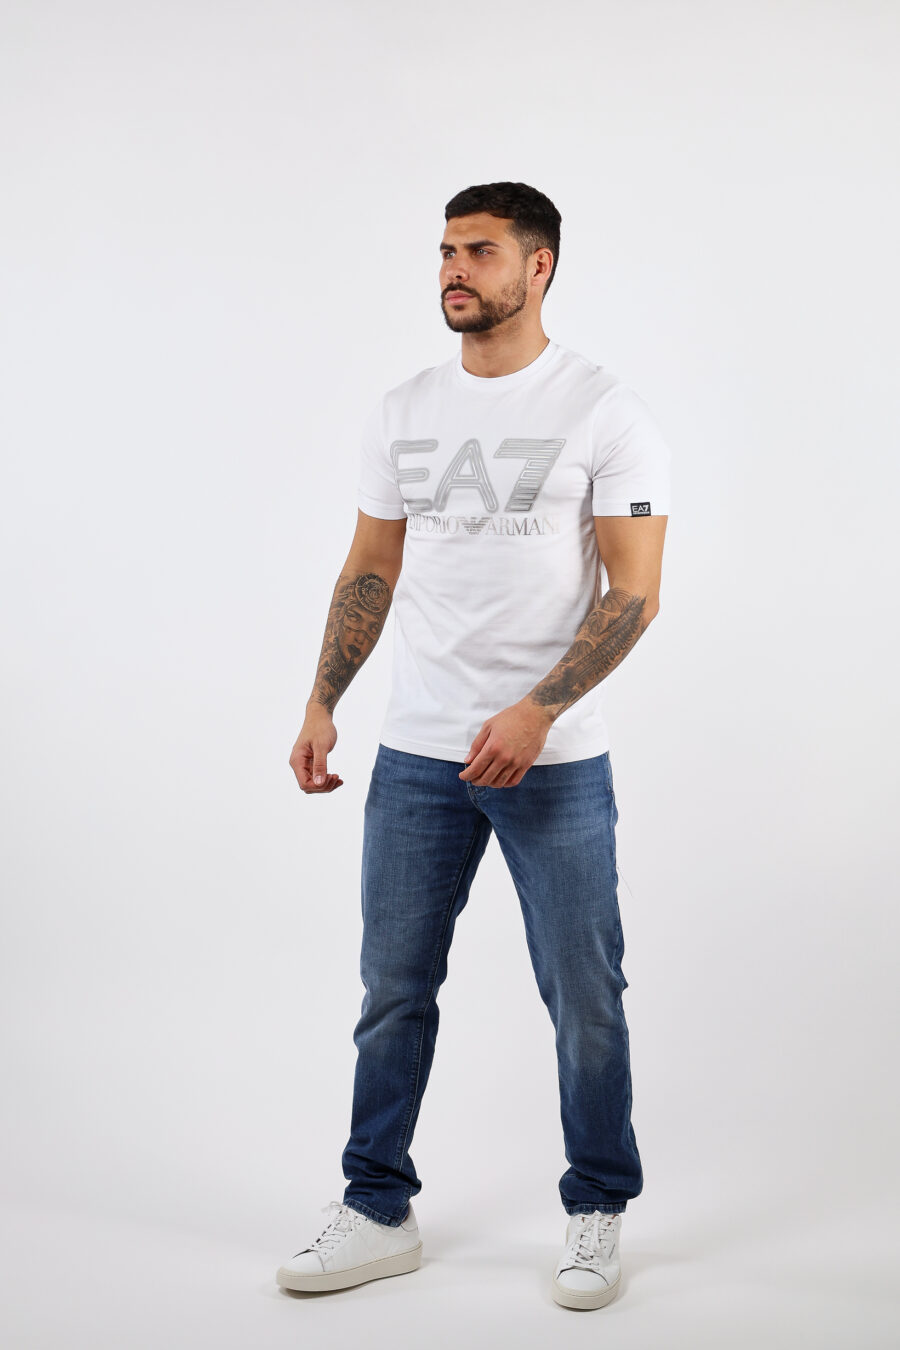 Camiseta blanca con maxilogo "lux identity" plateado neón - BLS Fashion 21